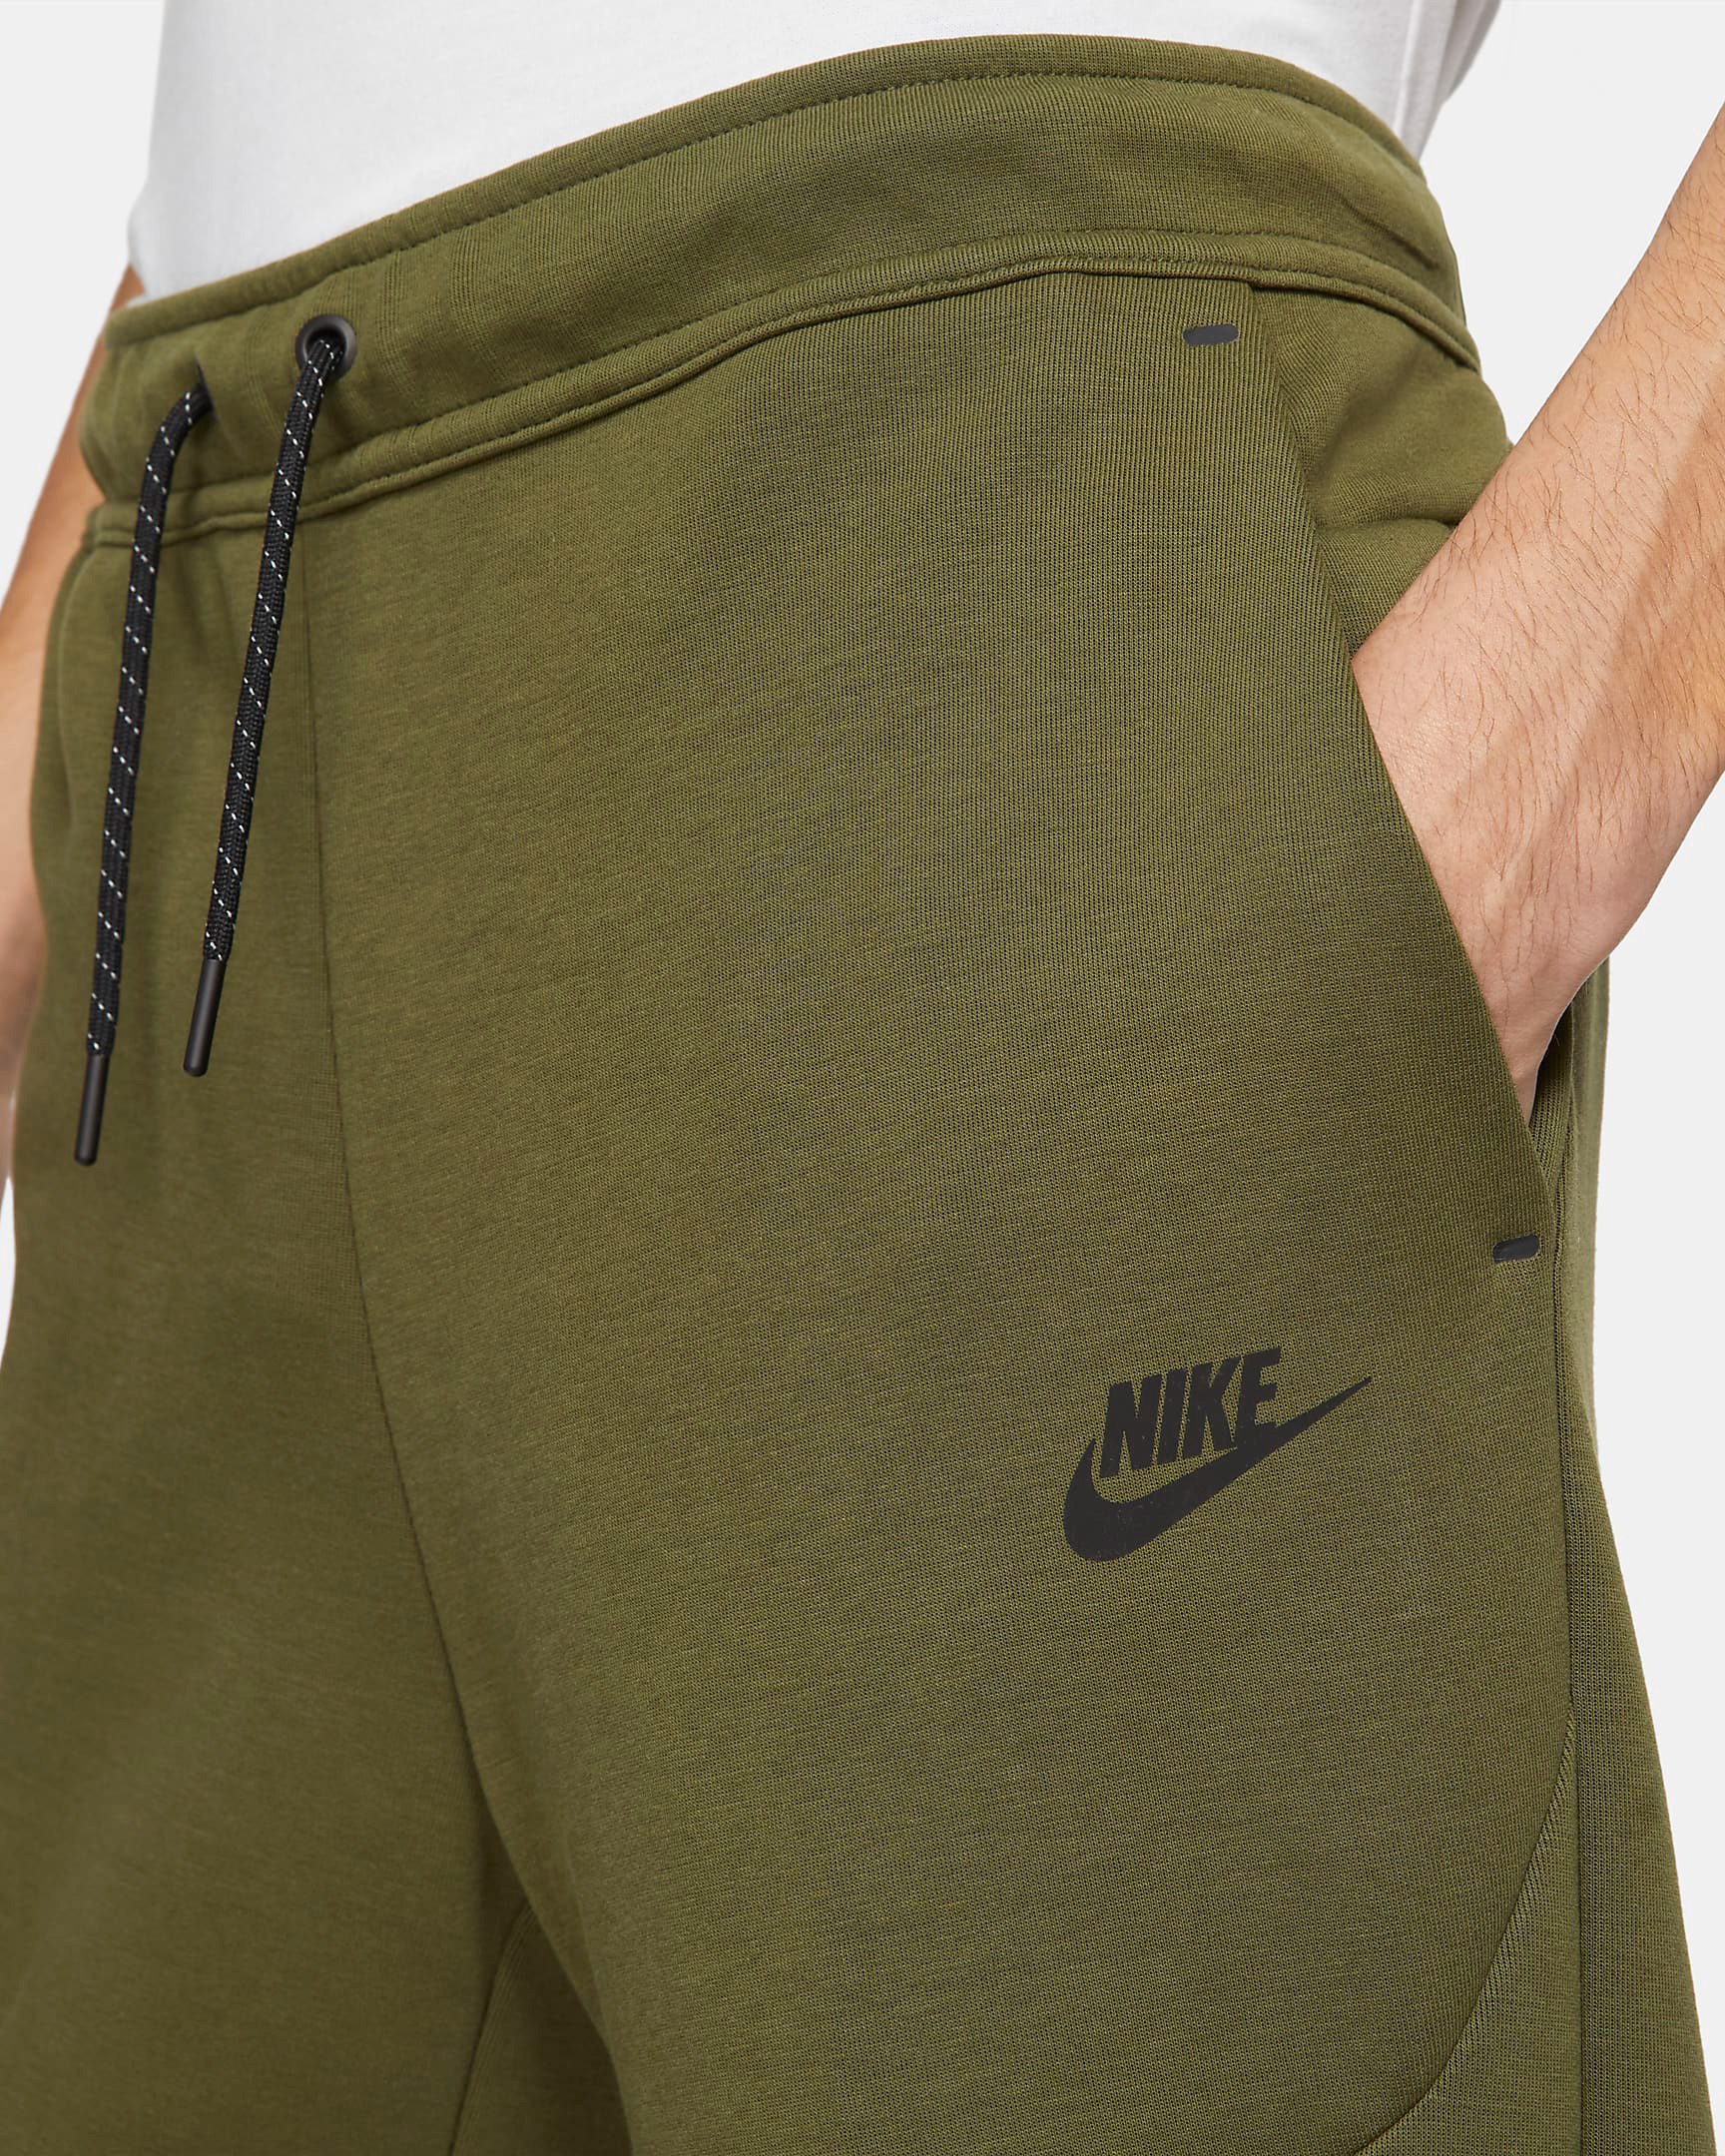 nike-rough-green-tech-fleece-joggers-pants-2